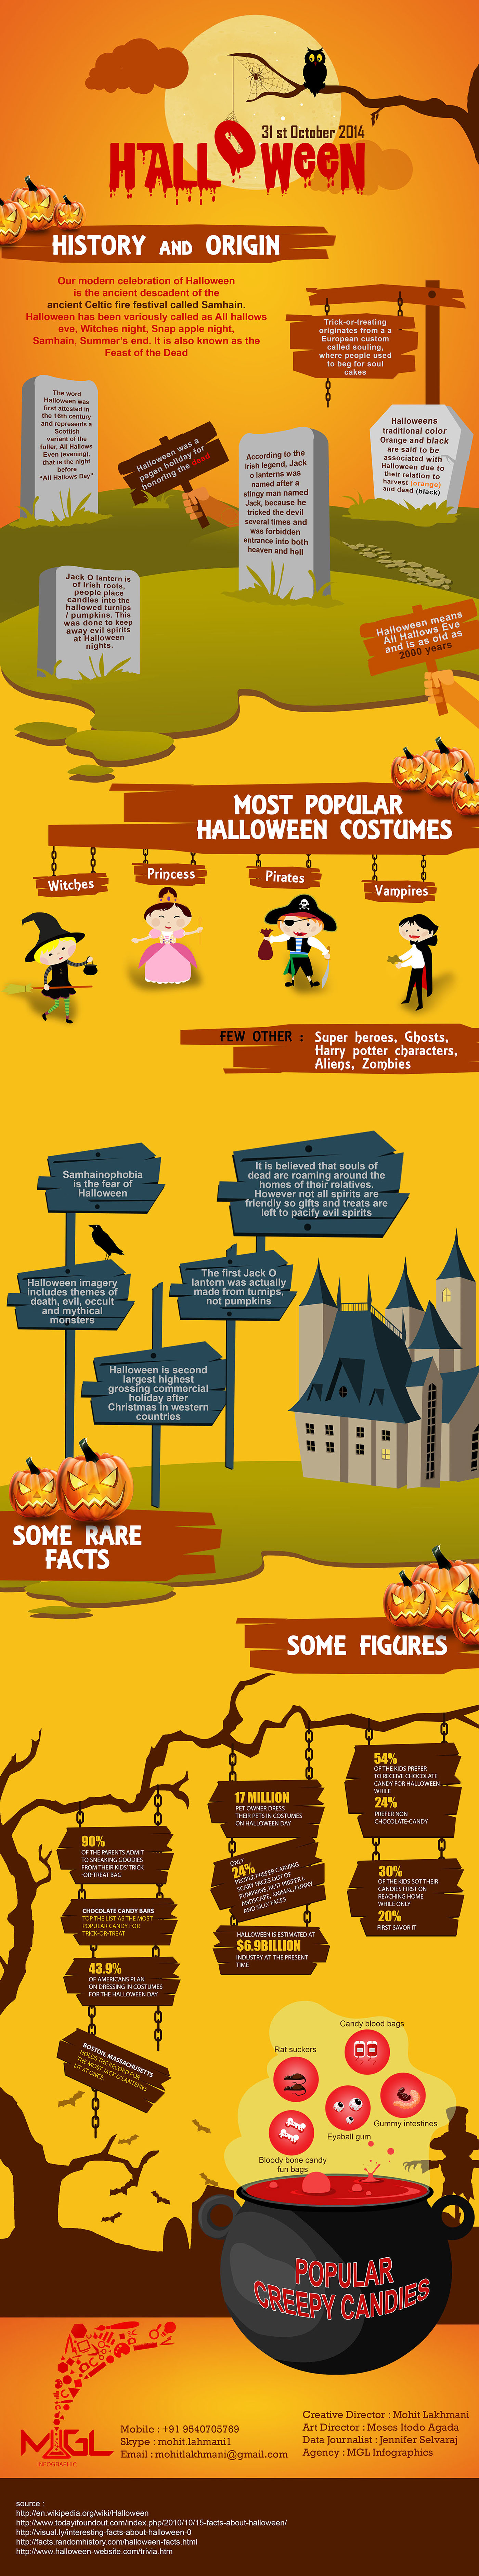 Halloween 31st october infographic visualization world pumpkin death faith costume night party light DANCE   pranks